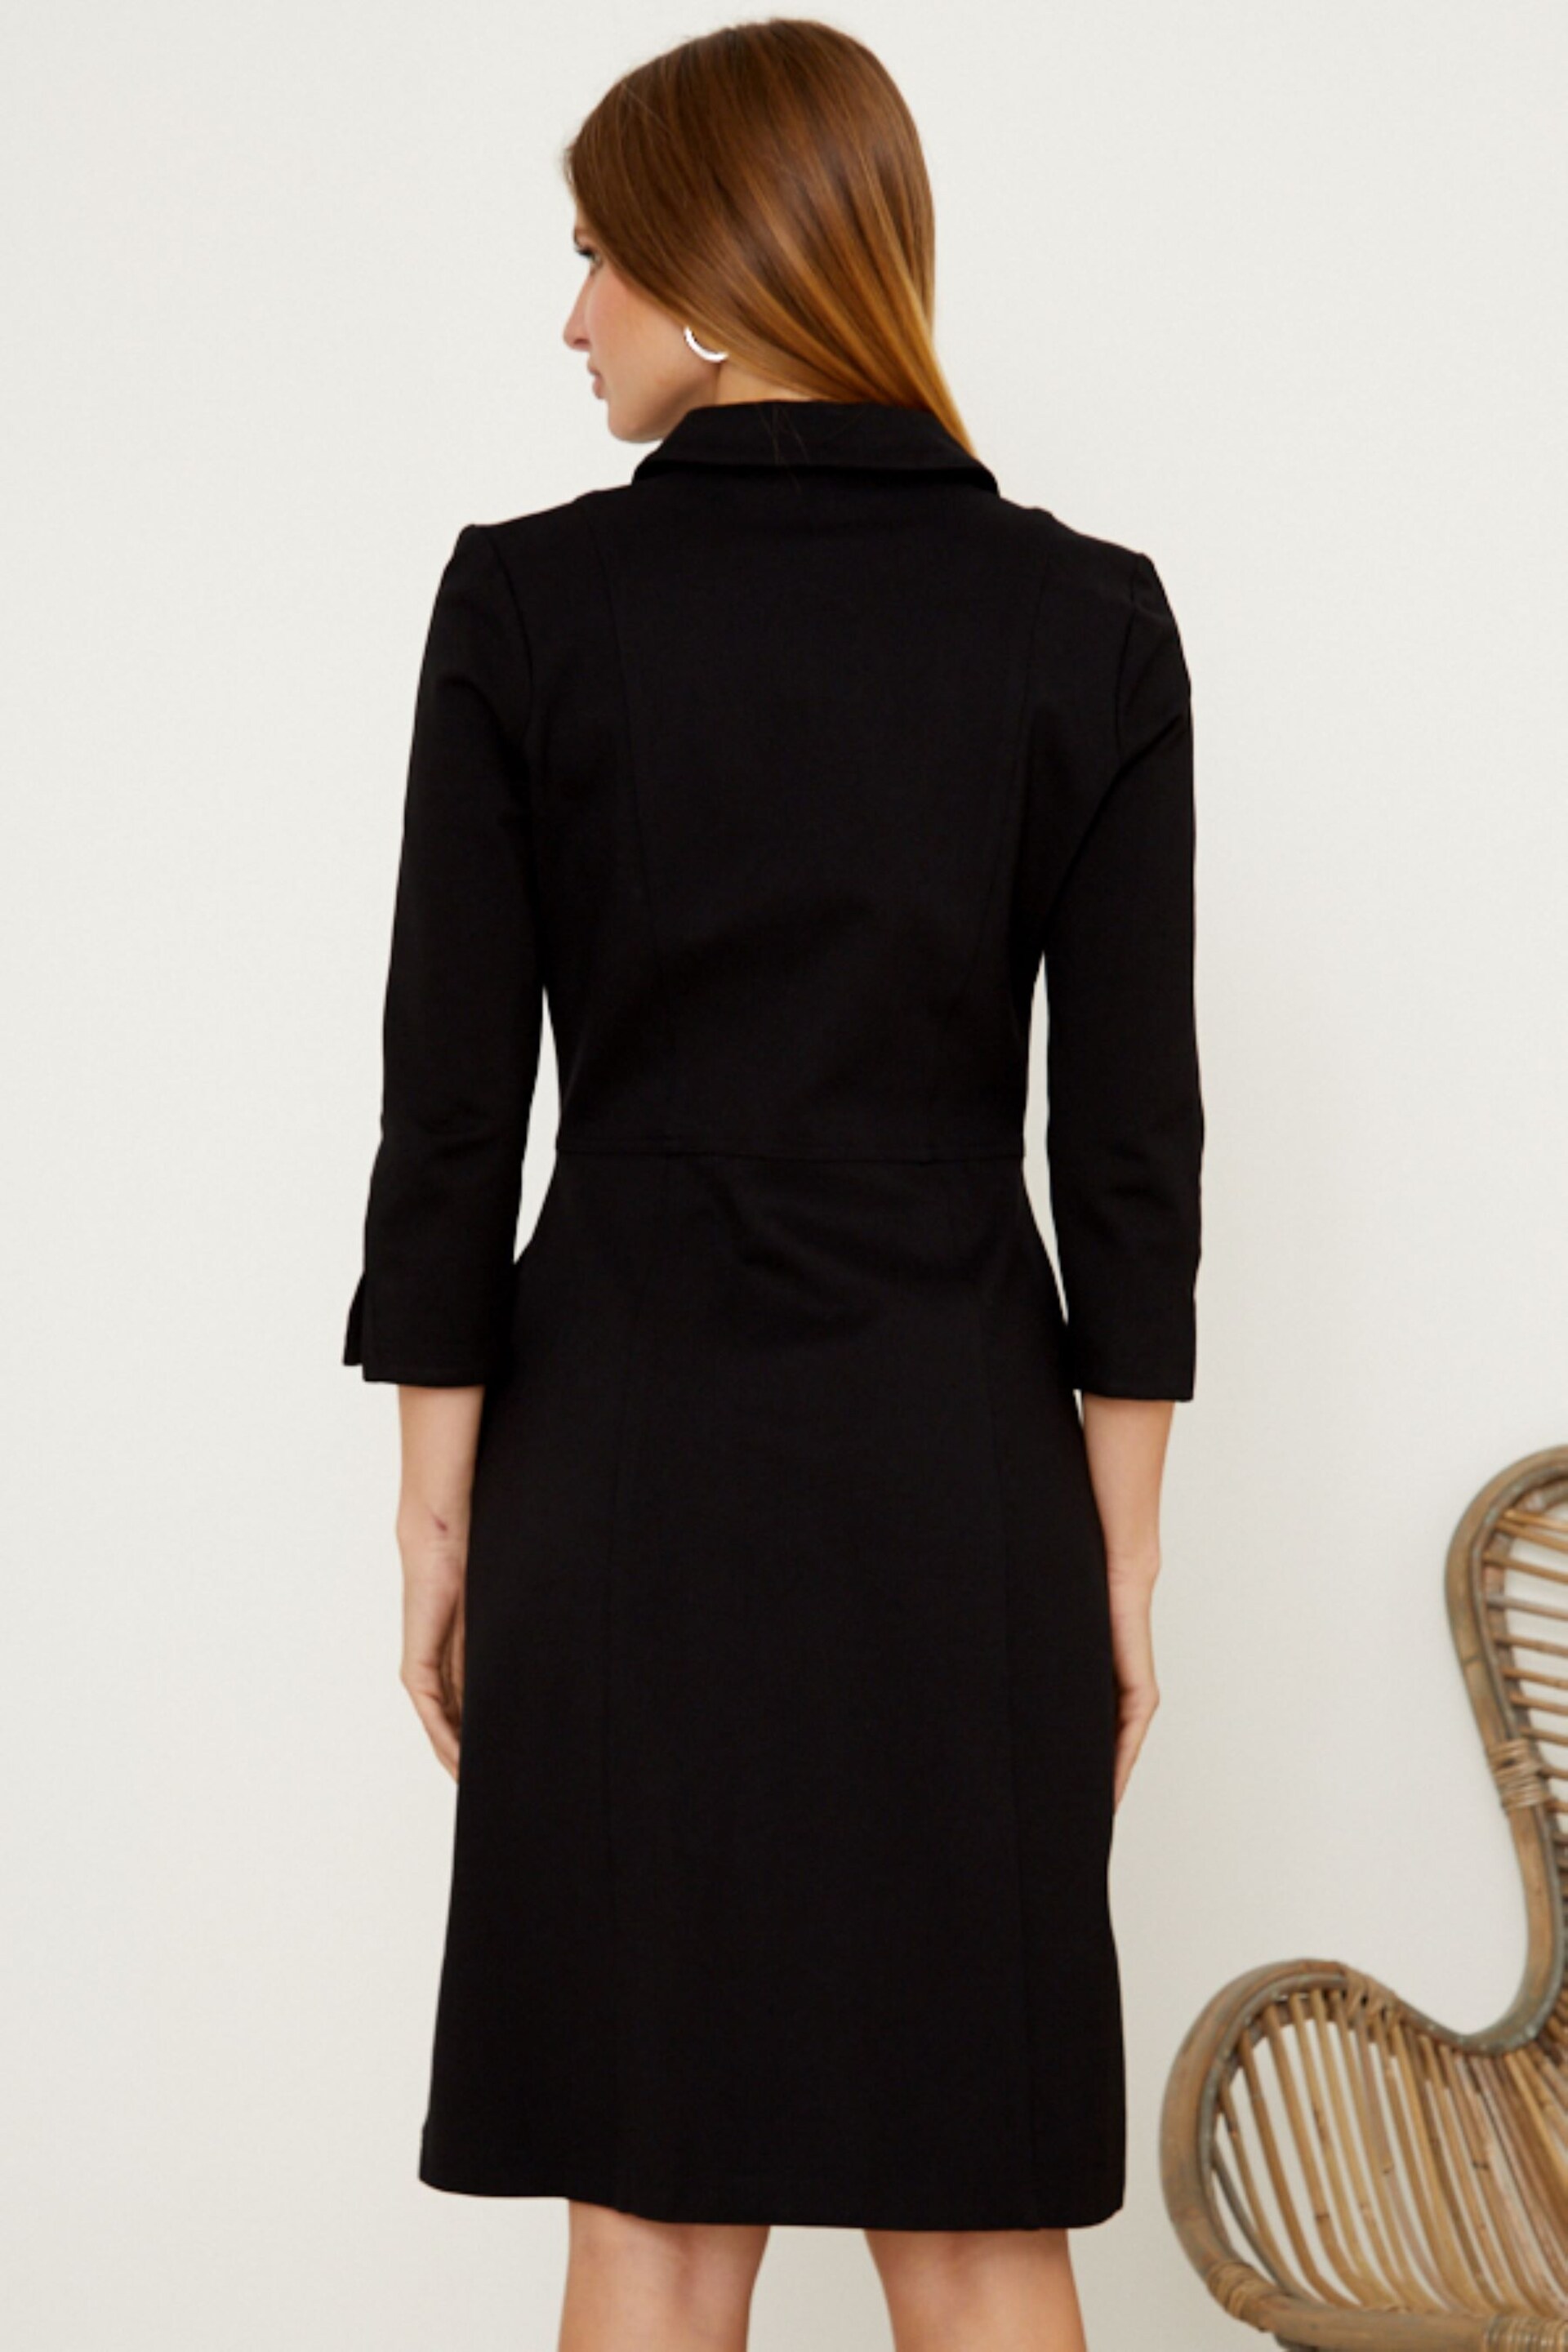 Sosandar Black Ponte Popper Front Shirt Dress - Image 2 of 5